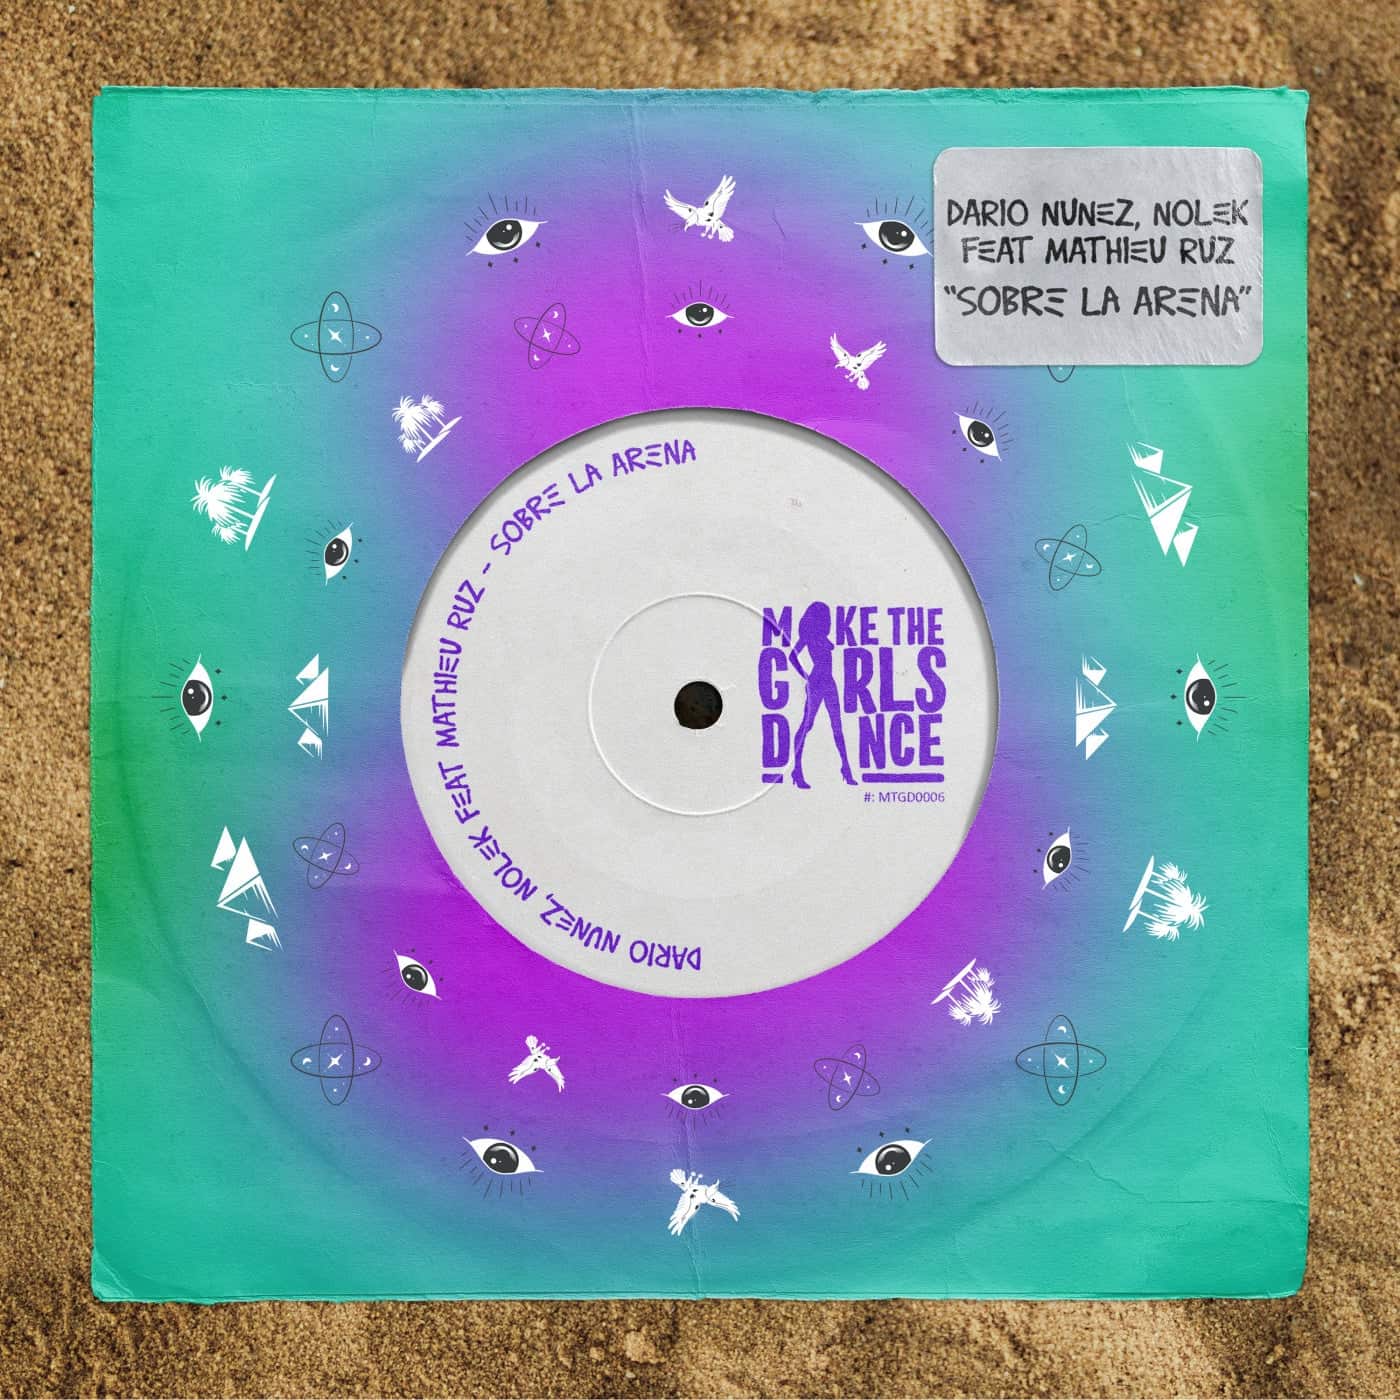 image cover: Dario Nunez, Nolek - Sobre La Arena (Extended Mix) on Make The Girls Dance Records